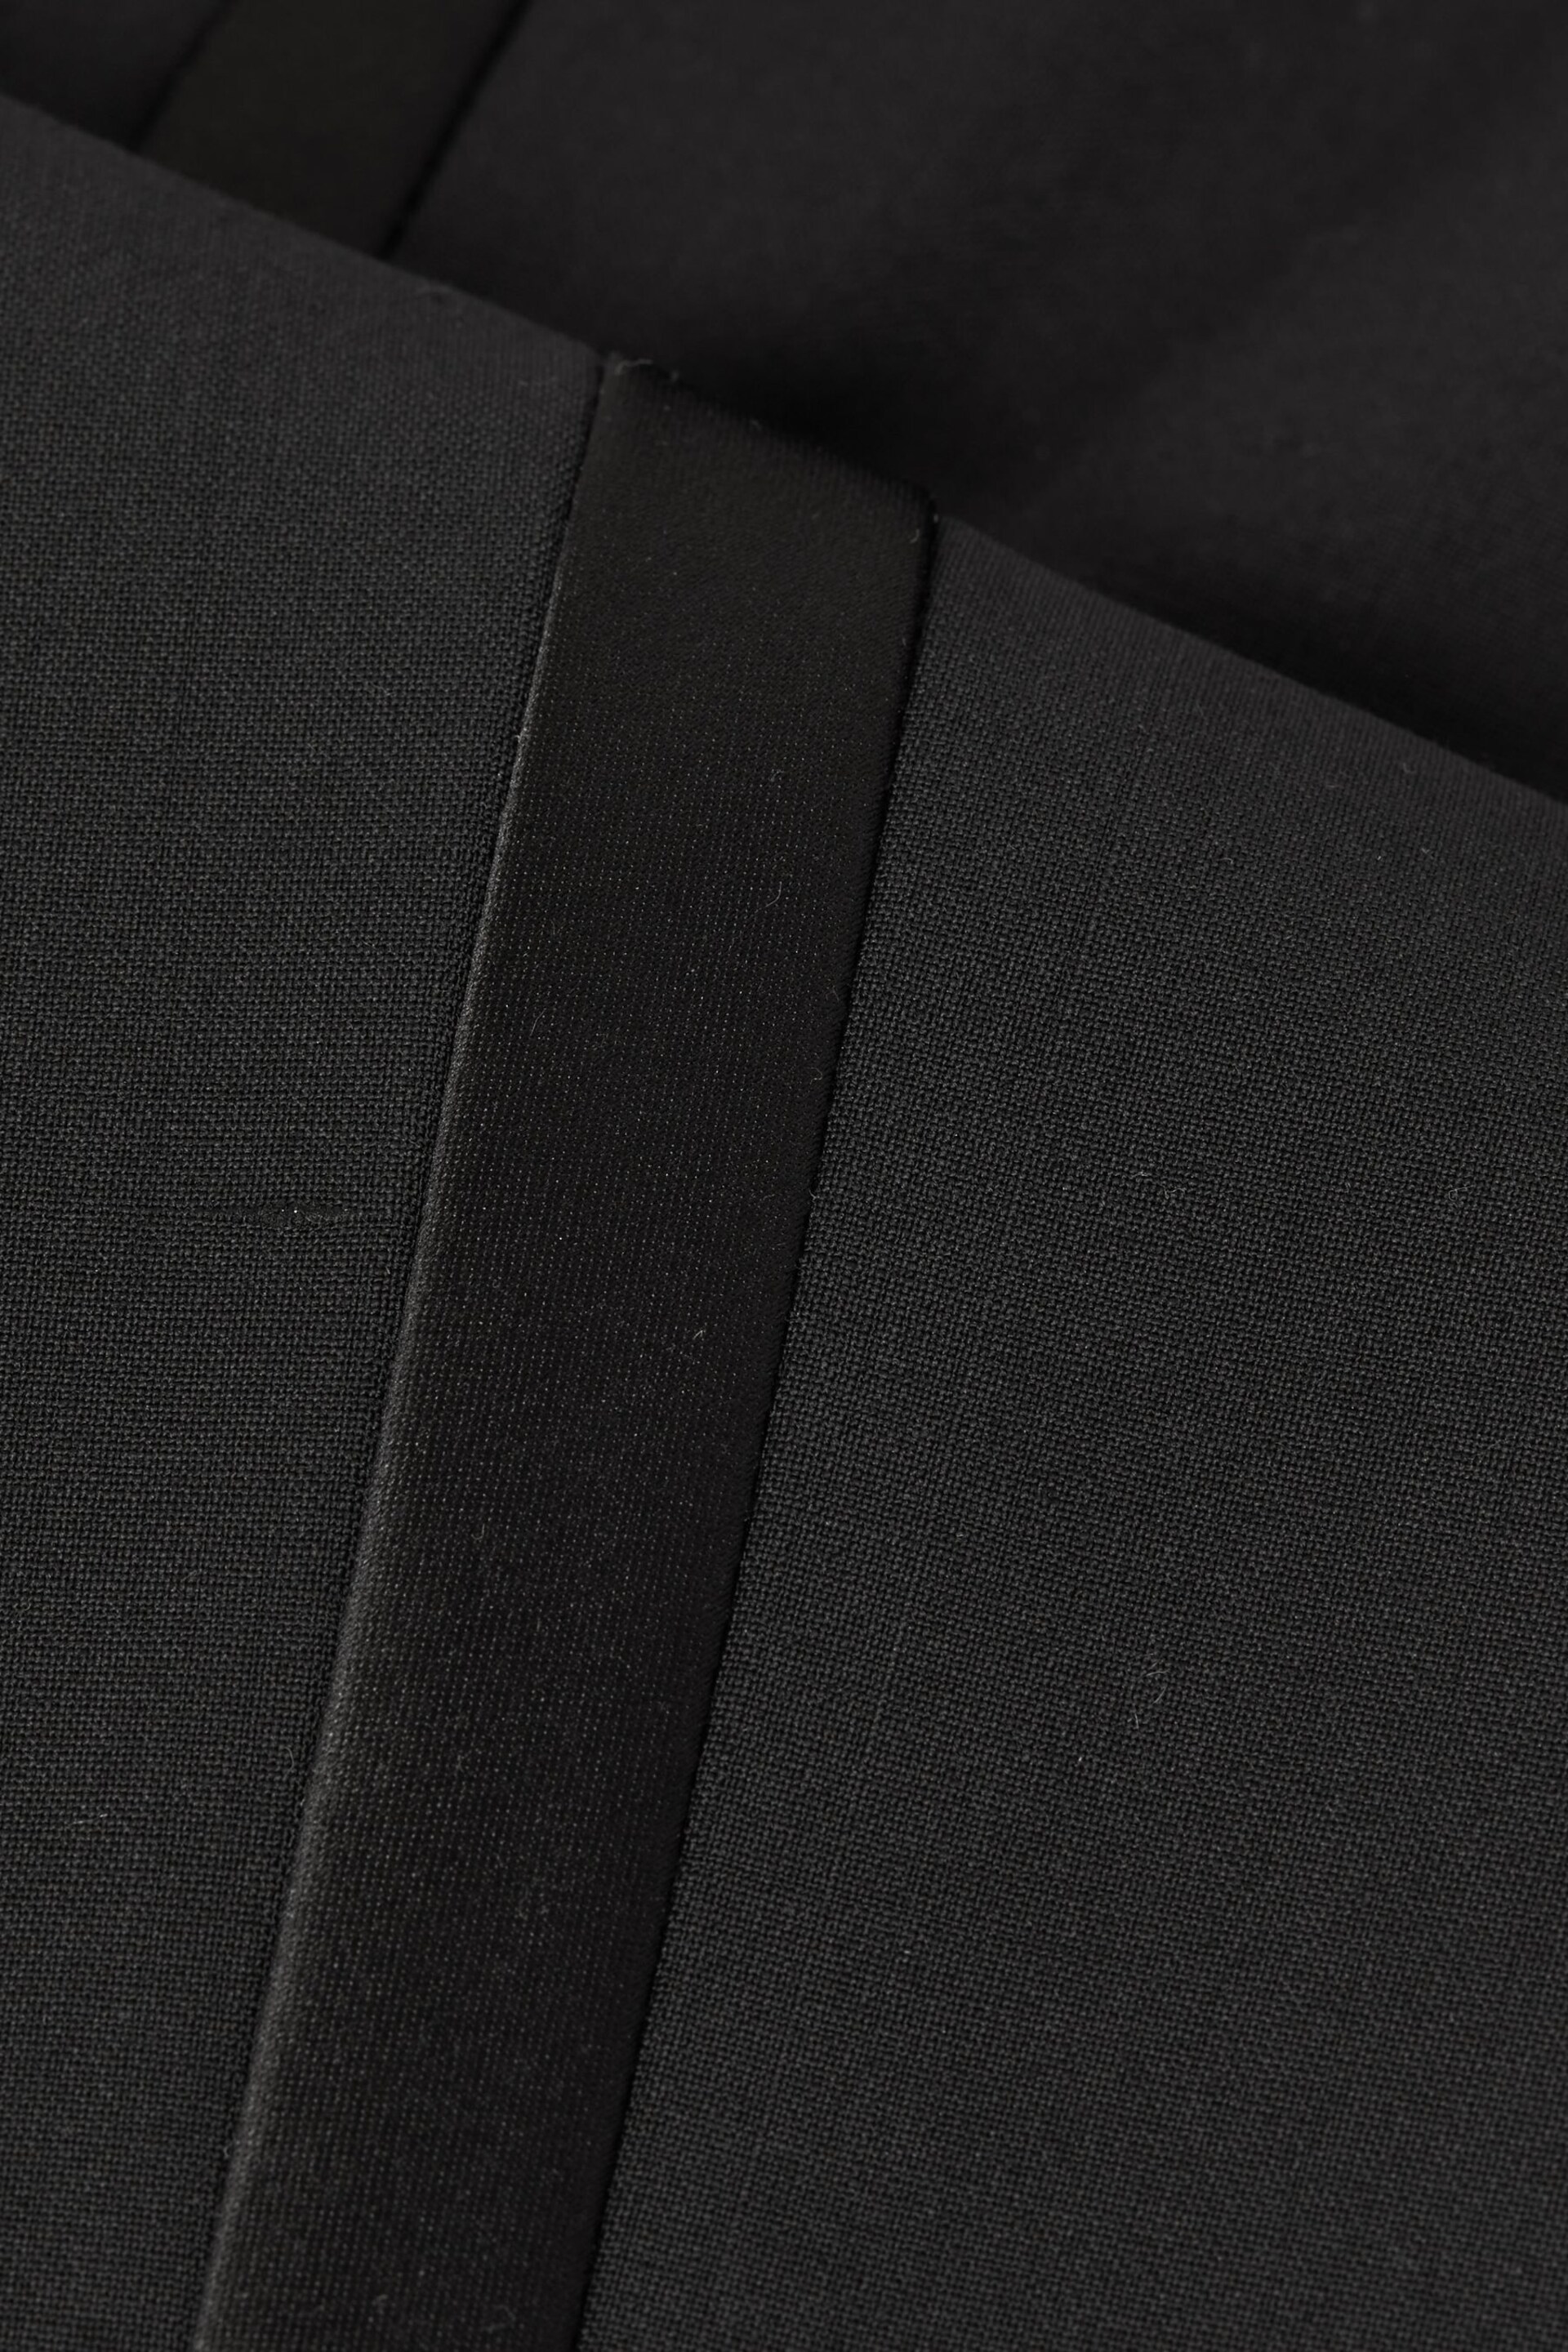 Reiss Black Knightsbridge Junior Tuxedo Trousers - Image 6 of 6